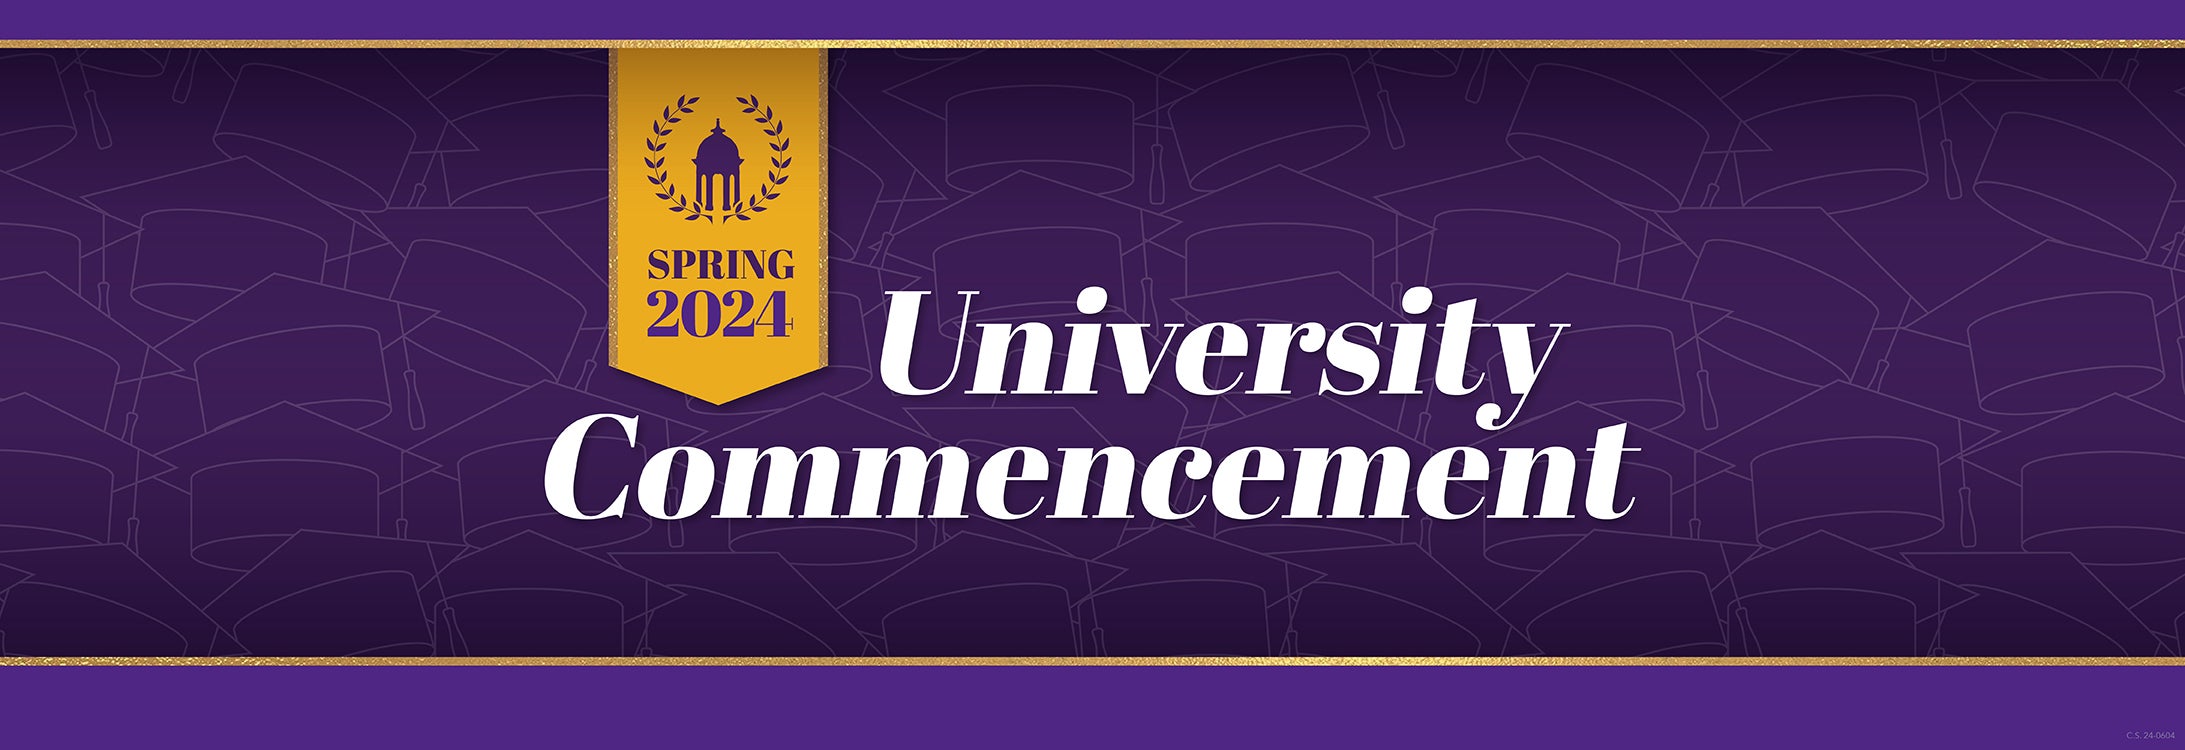 Spring 2024 University Commencement